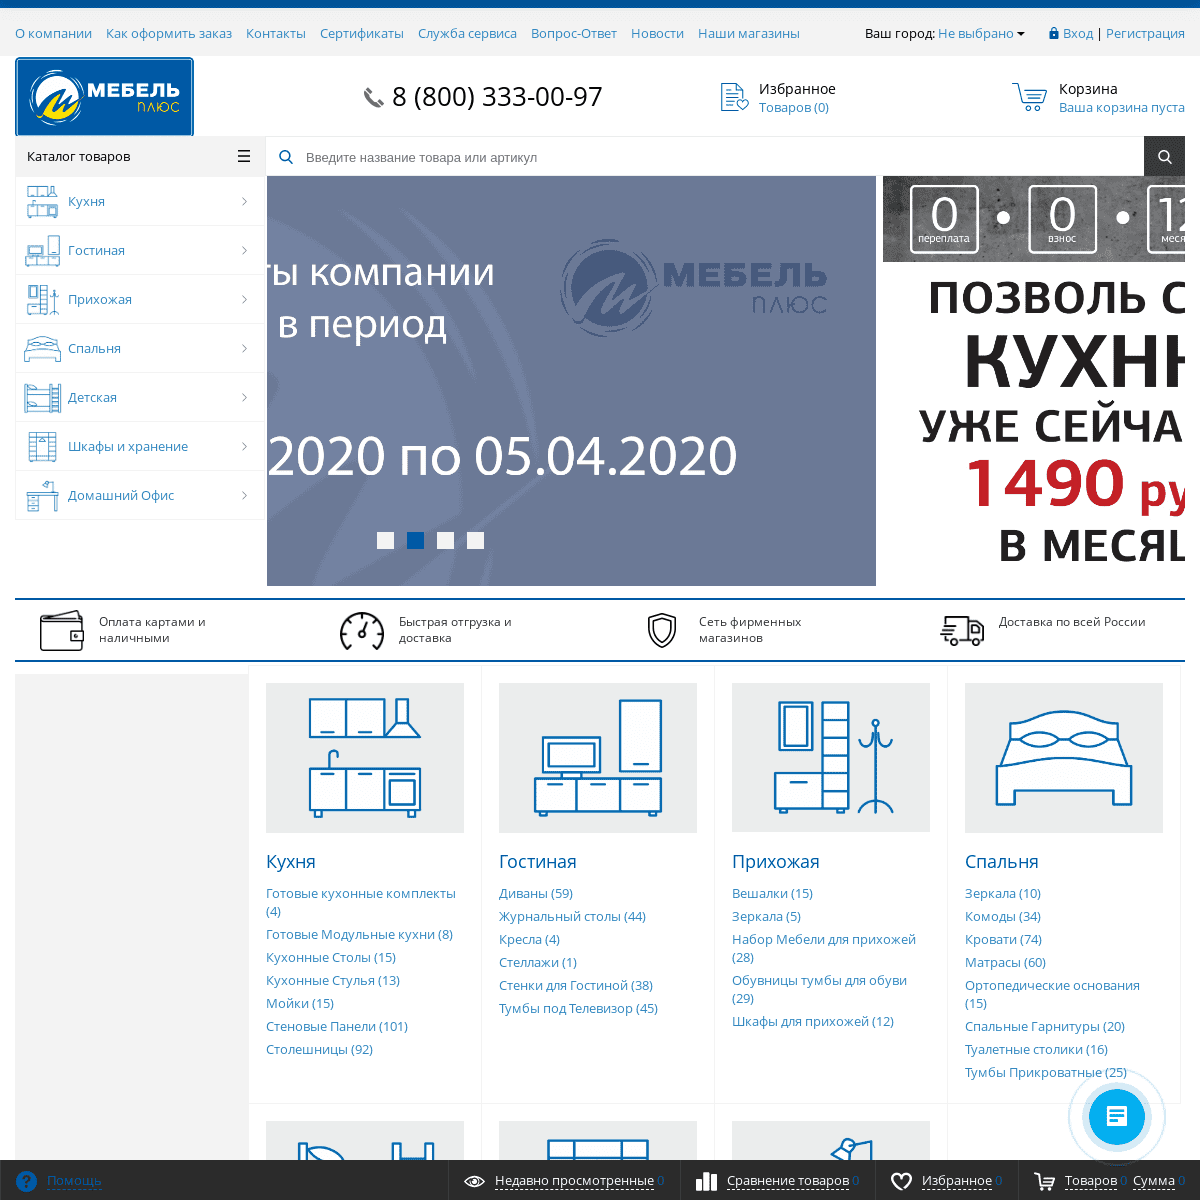 A complete backup of mebelplus.ru